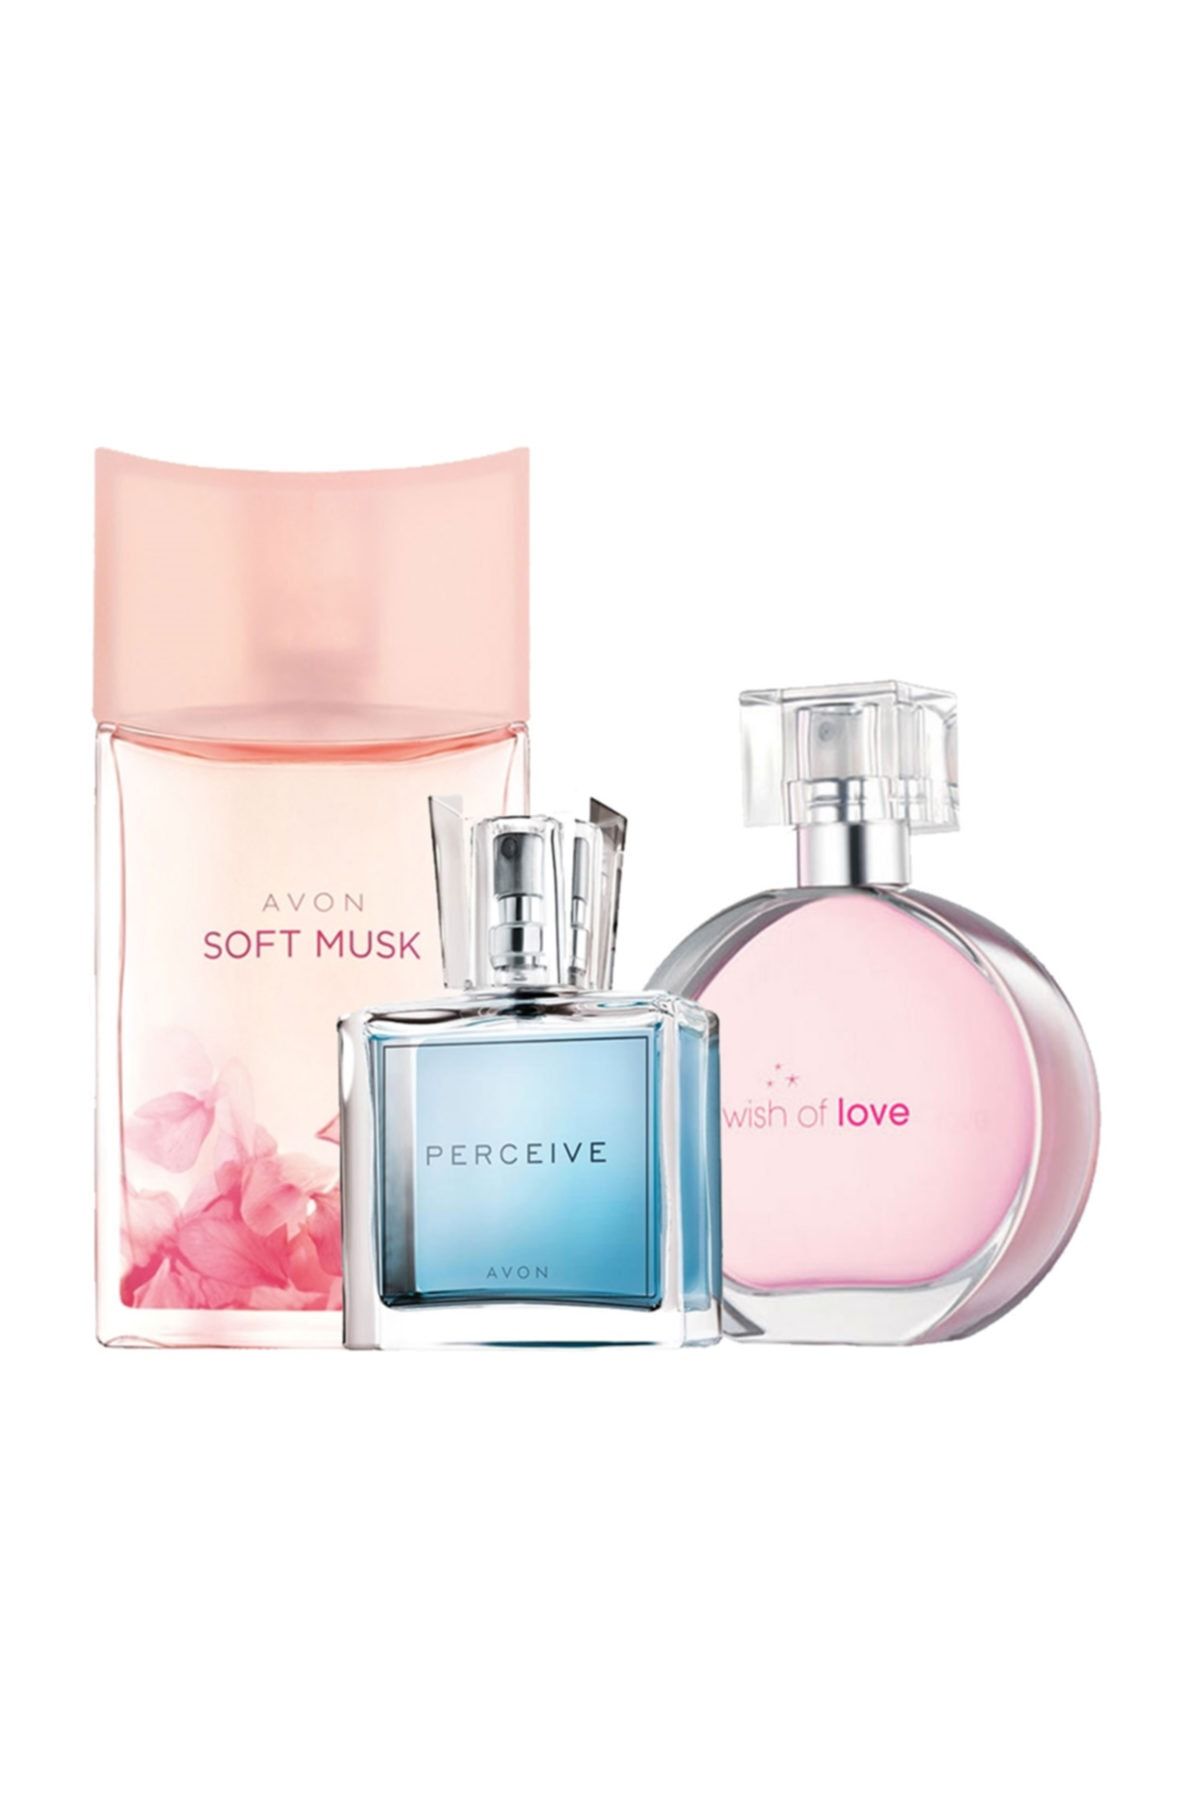 Avon Soft Musk & Wish of Love & Perceive Üçlü Kadın Parfüm Seti